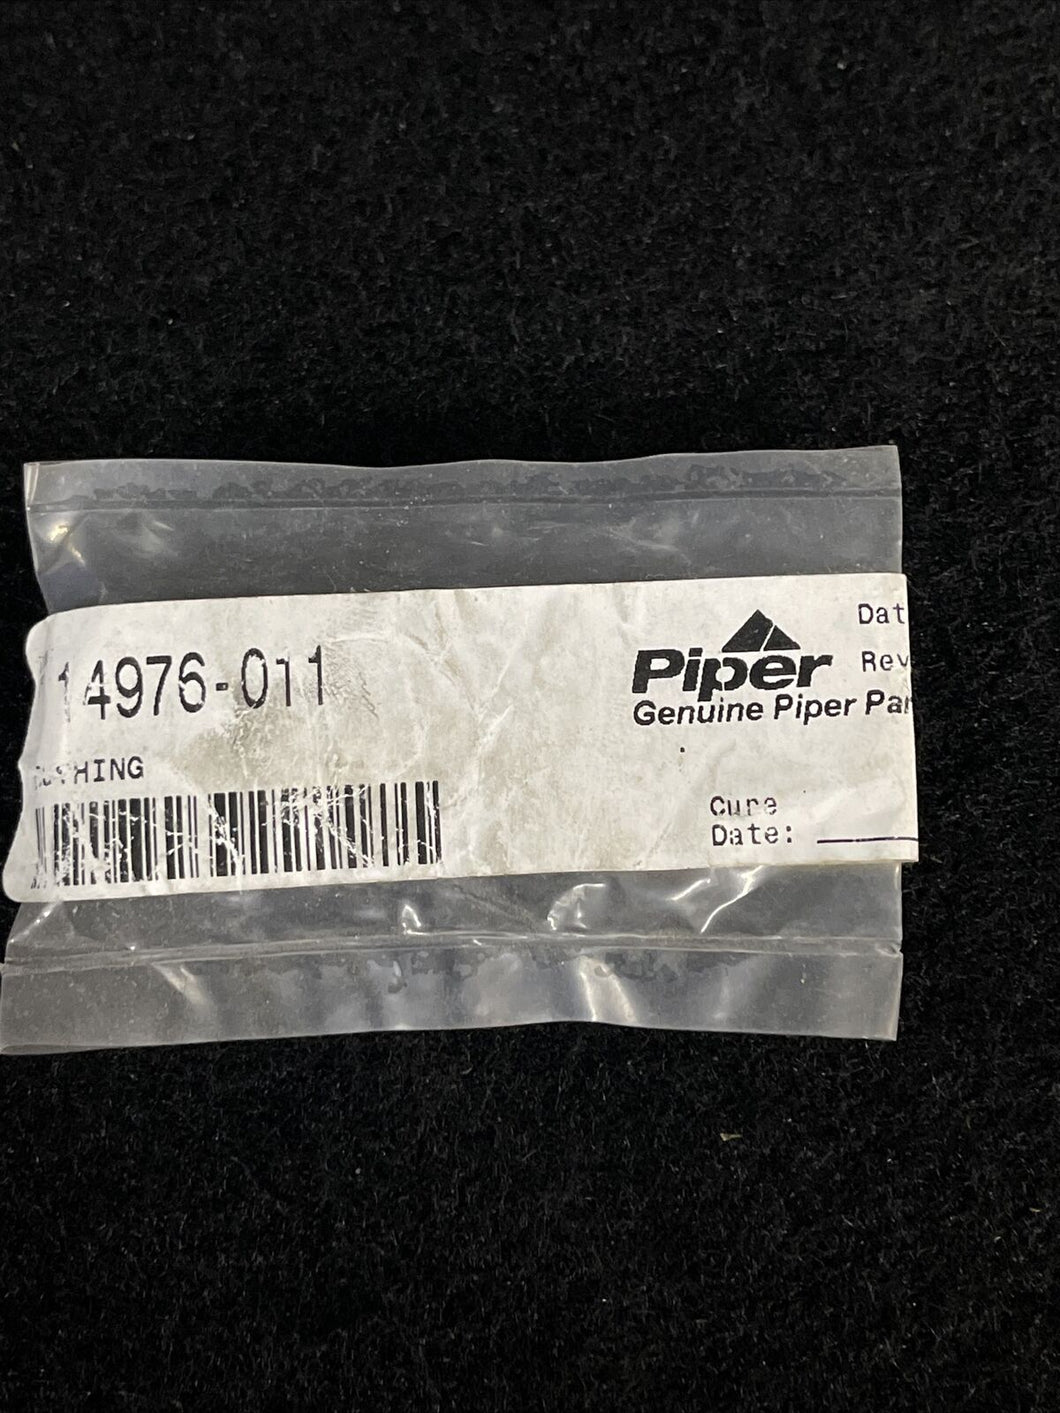 Piper 14976-011 Bushing